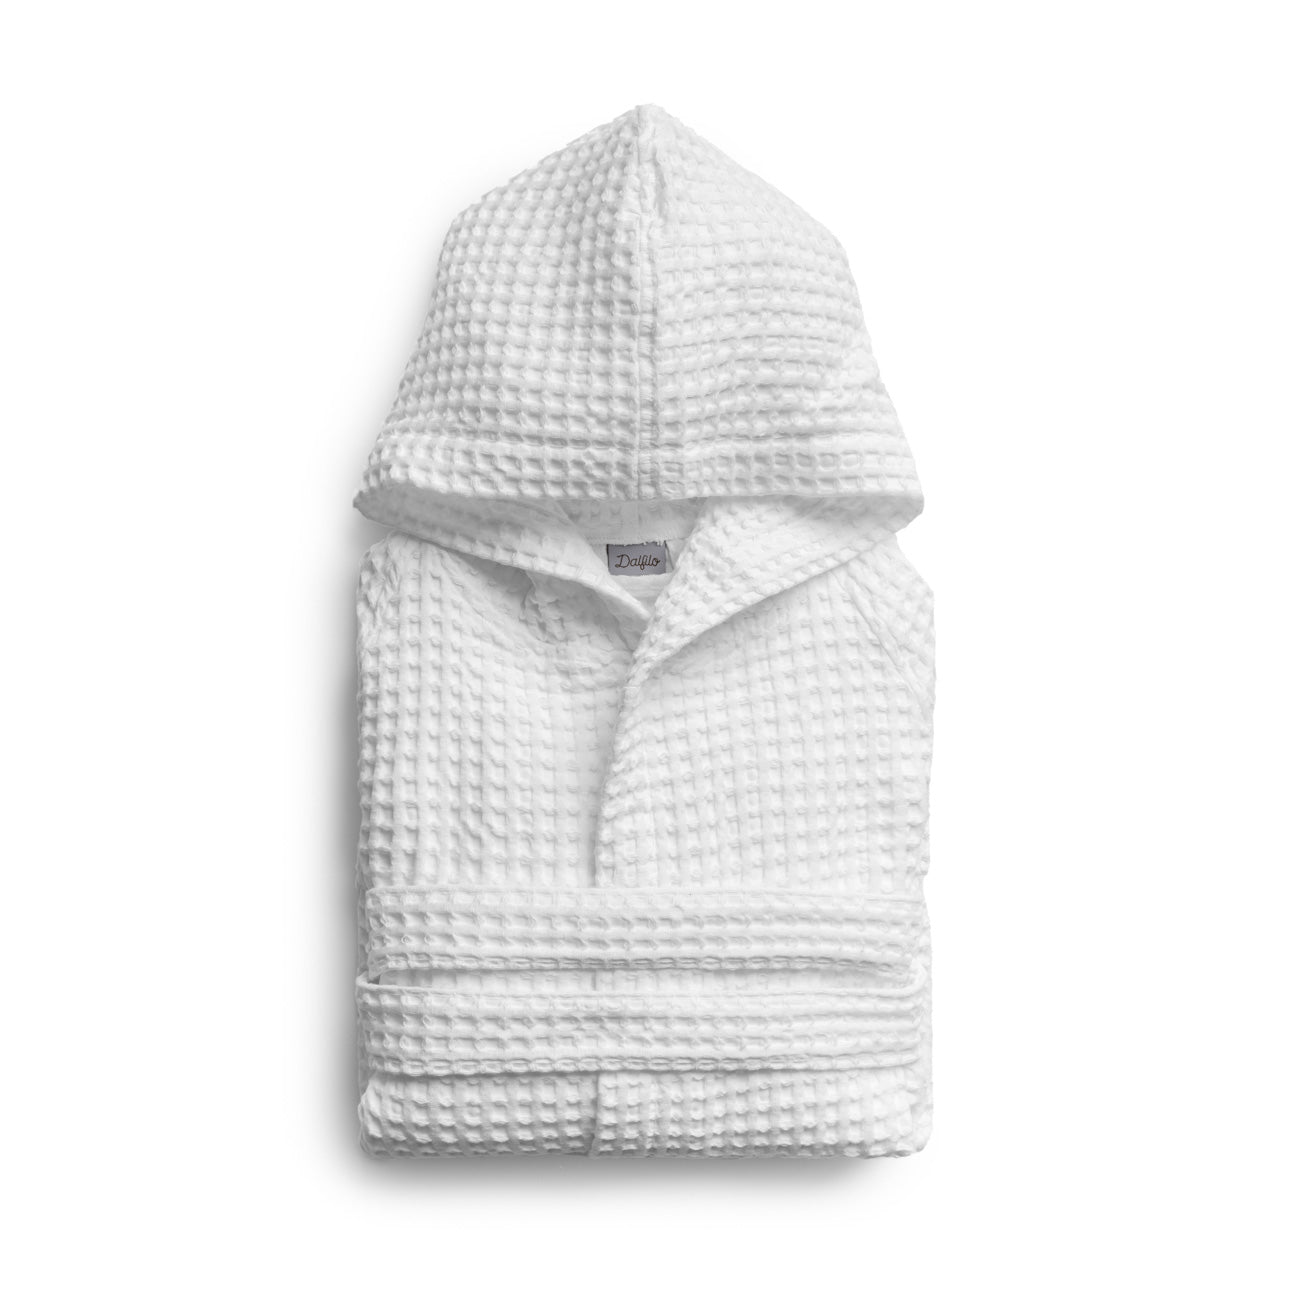 Honeycomb bathrobe with hood